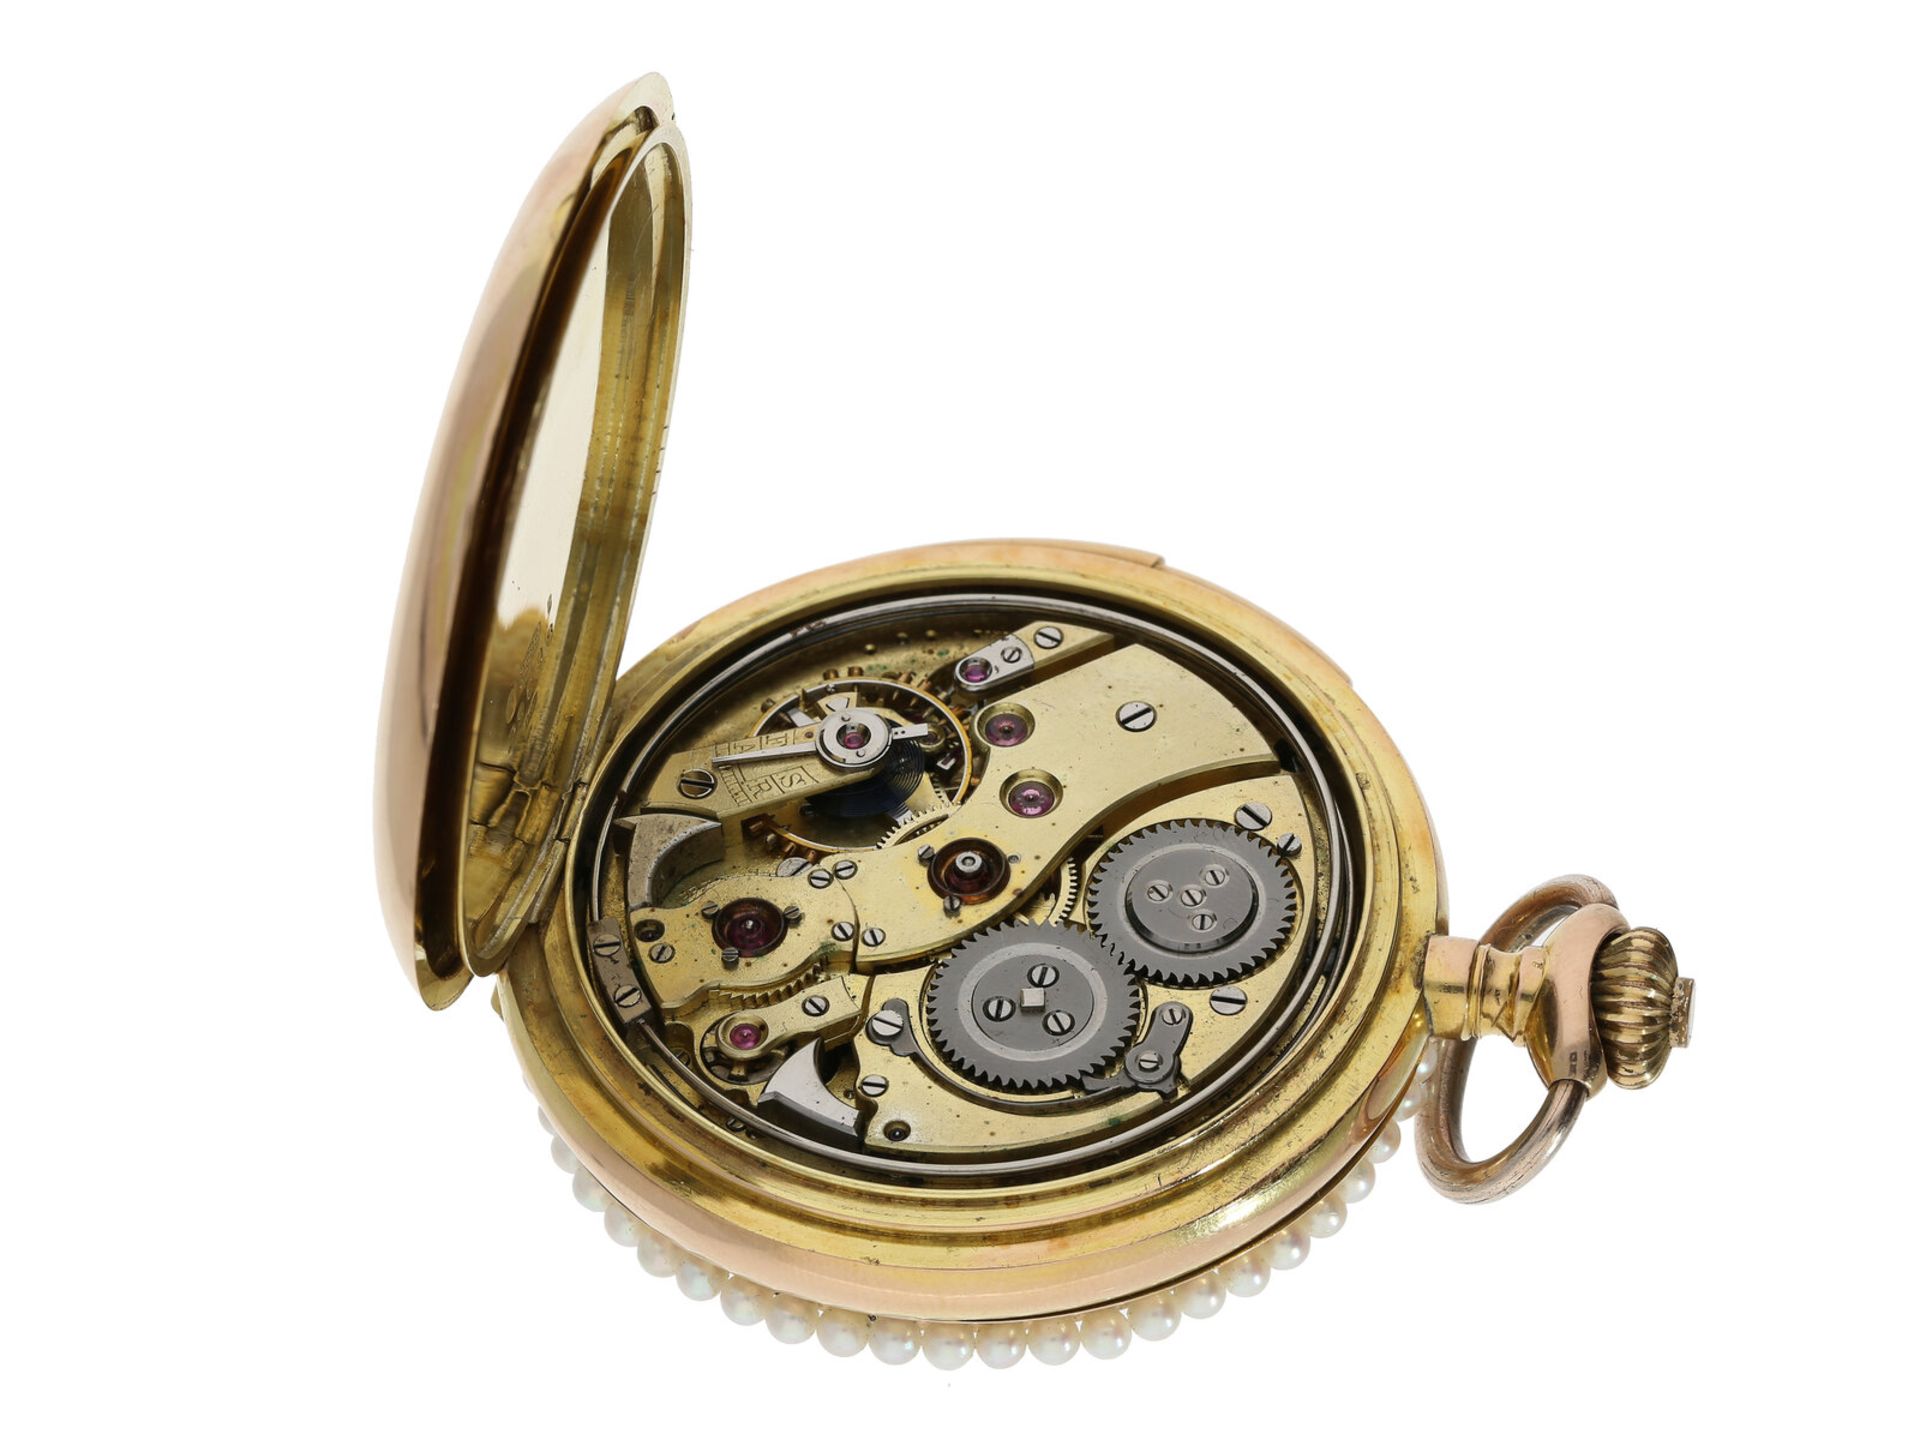 Taschenuhr: Schweizer Goldsavonnette mit Minutenrepetition, seltenes Le Coultre Kaliber, um 1900 - Image 3 of 3